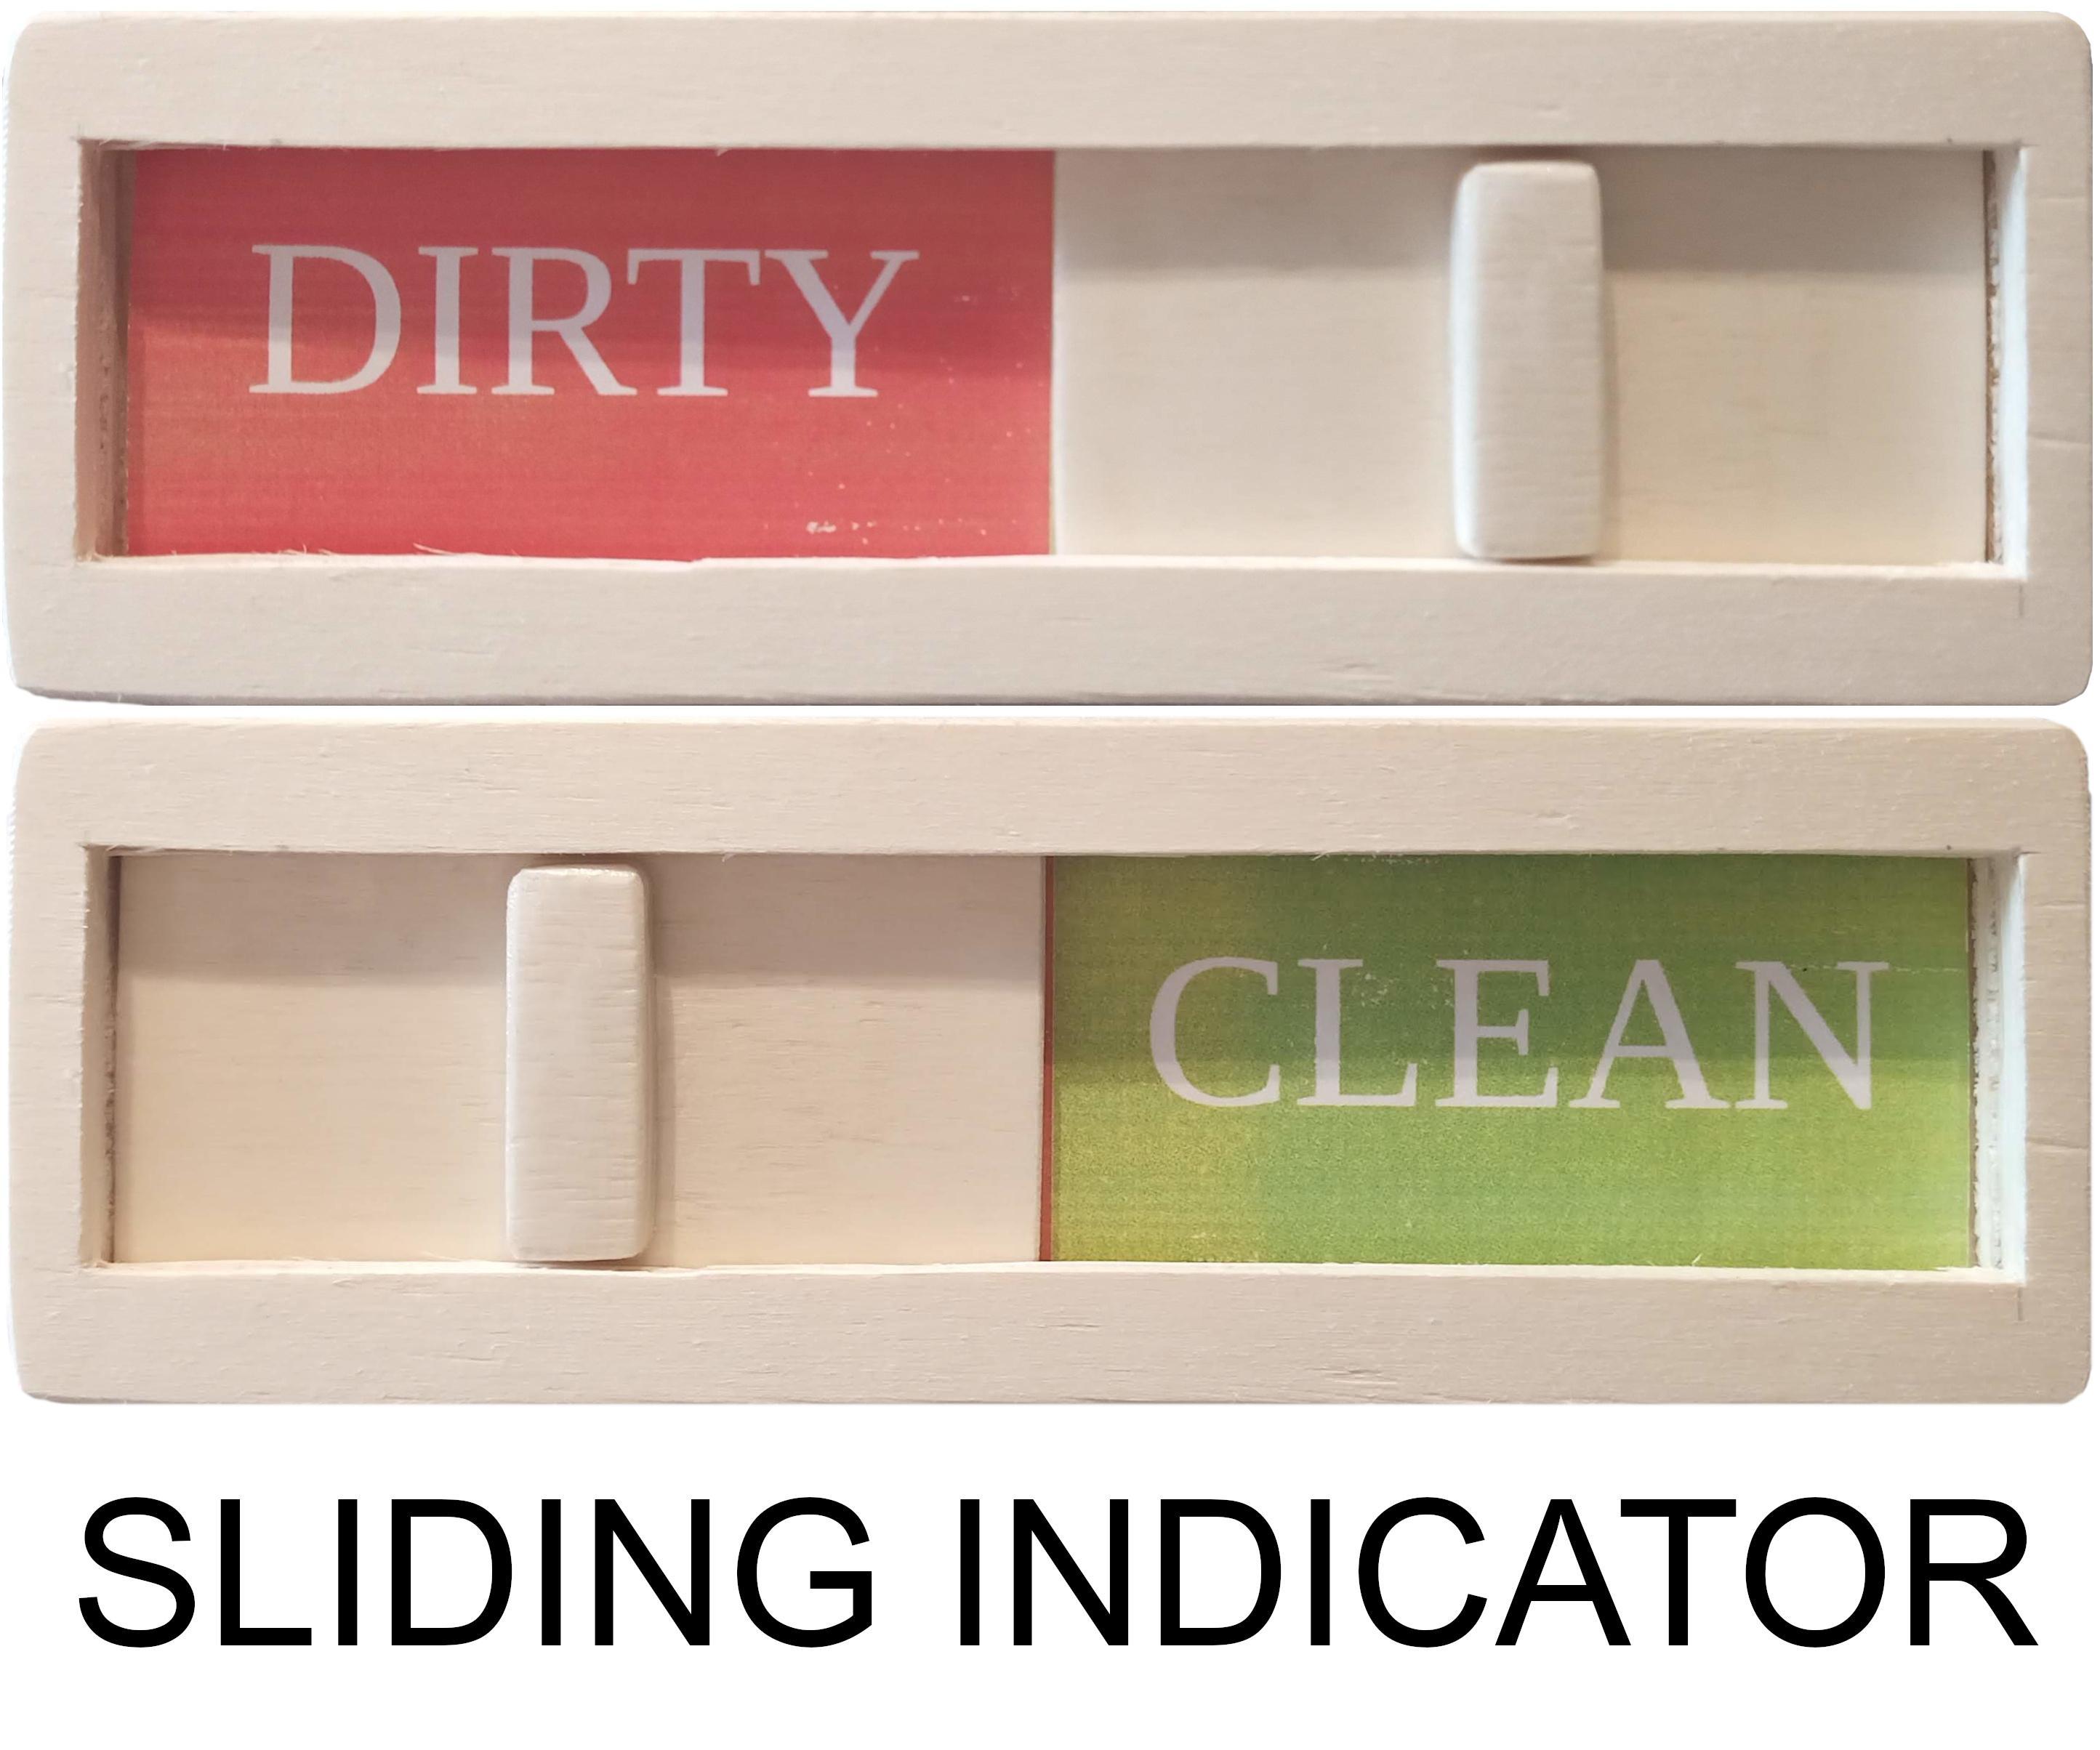 Dishwasher Dirty-Clean Sliding Indicator